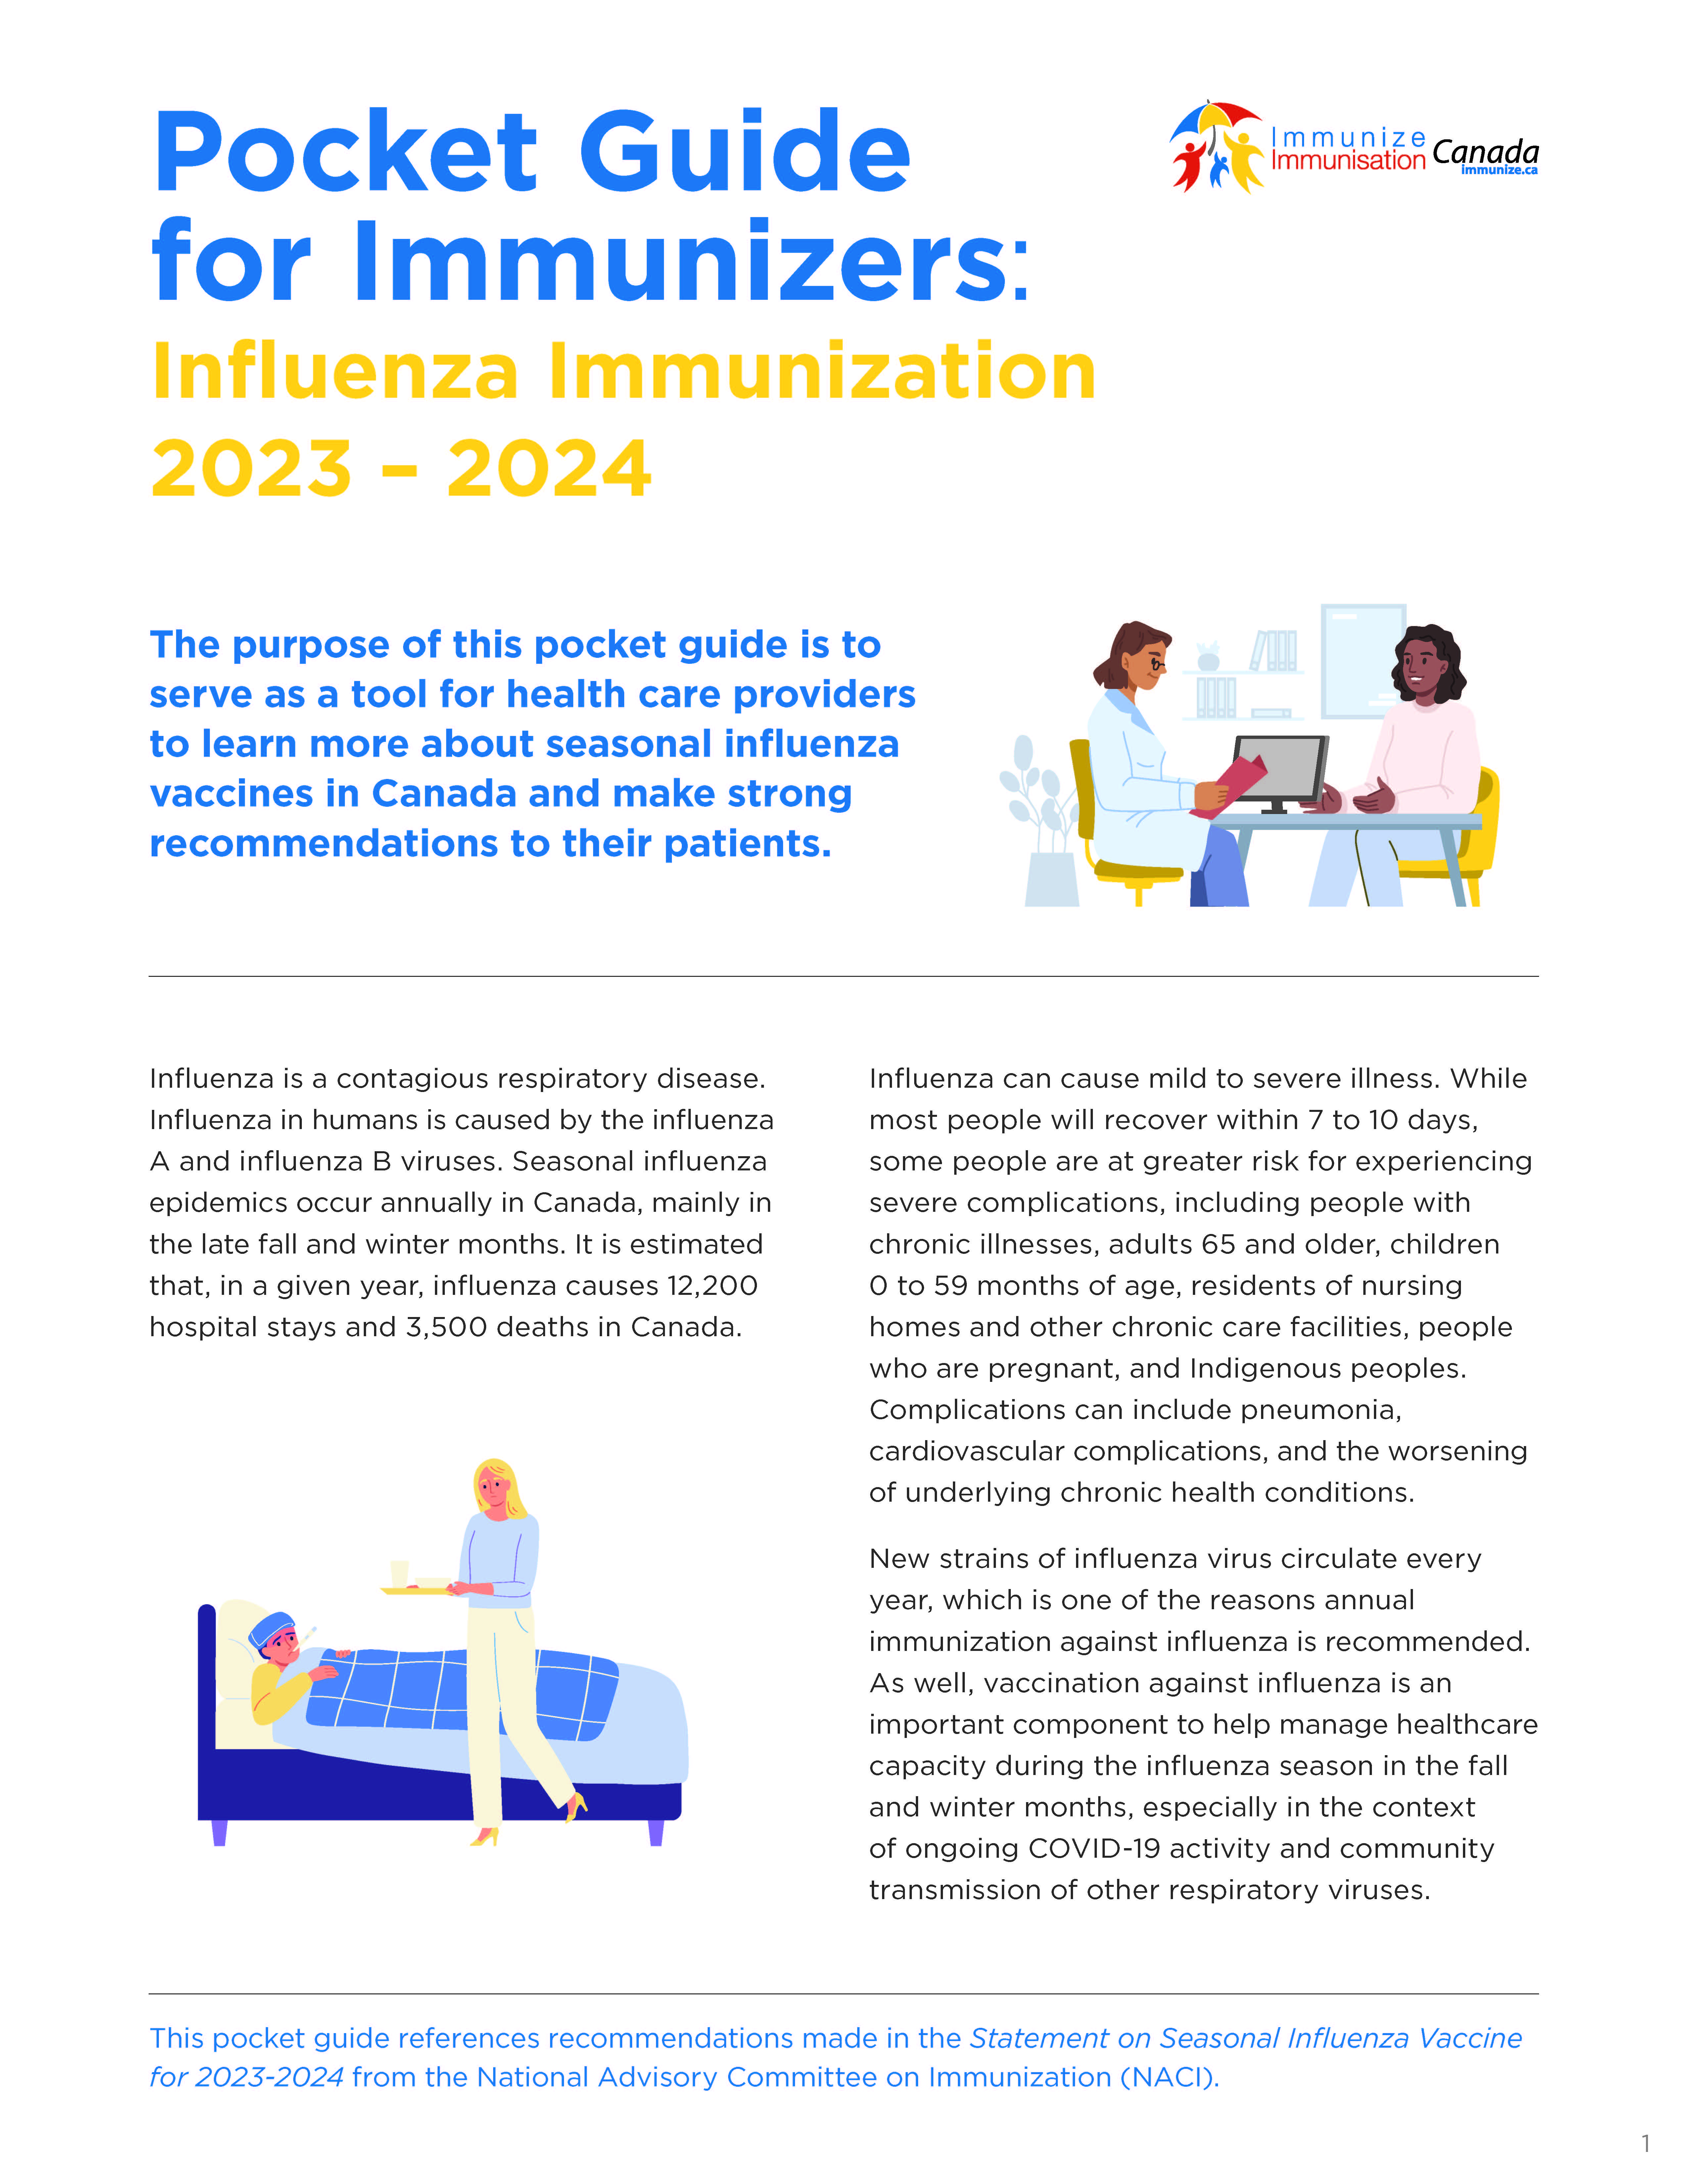 Pocket Guide for Immunizers: Influenza Immunization 2023-2024